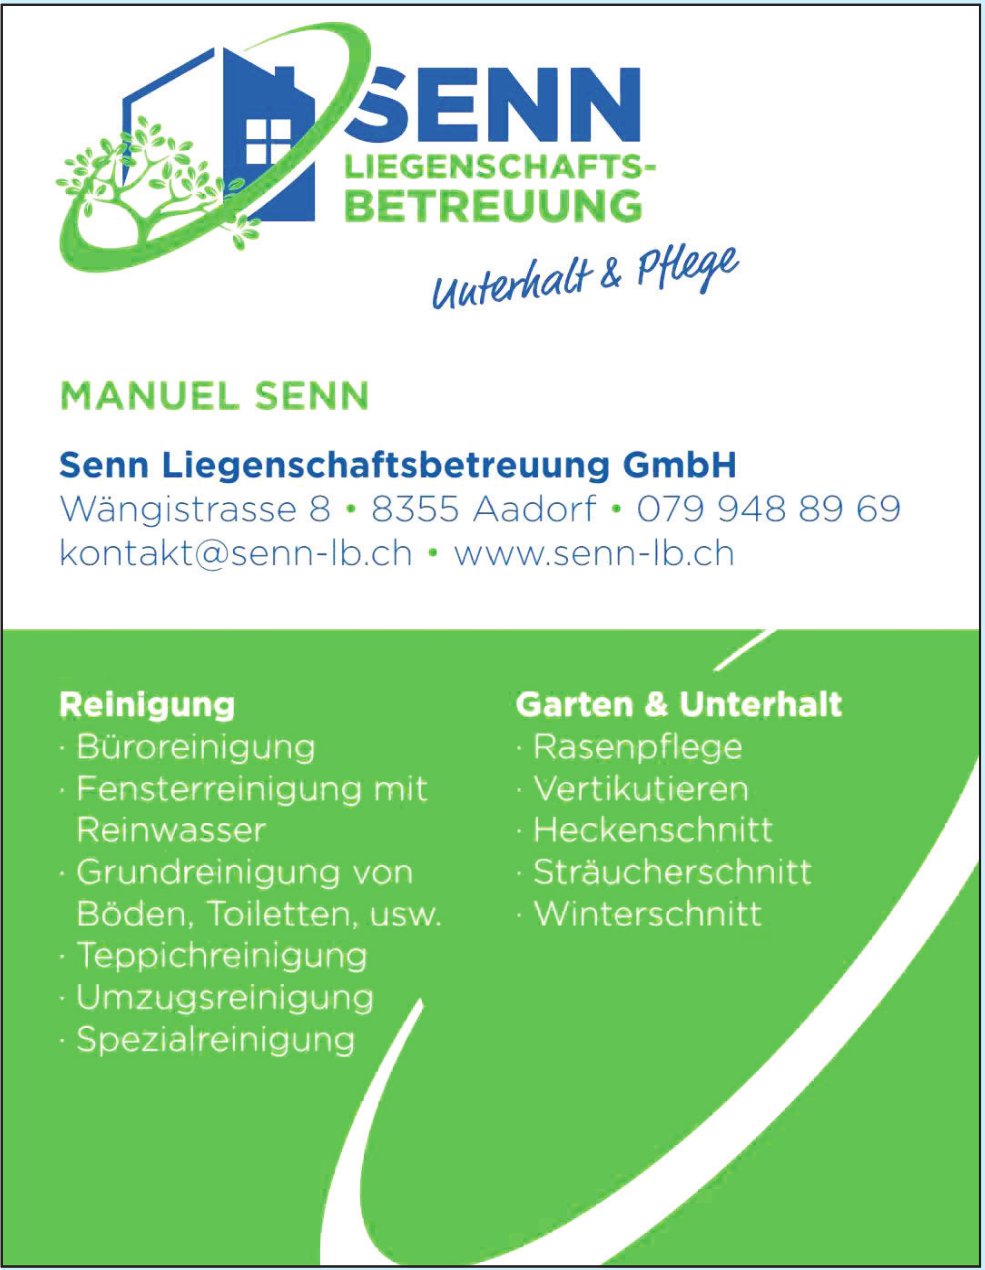 Senn Liegenschaftsbetreuung GmbH, Aadorf - Reinigung, Garten & Unterhalt